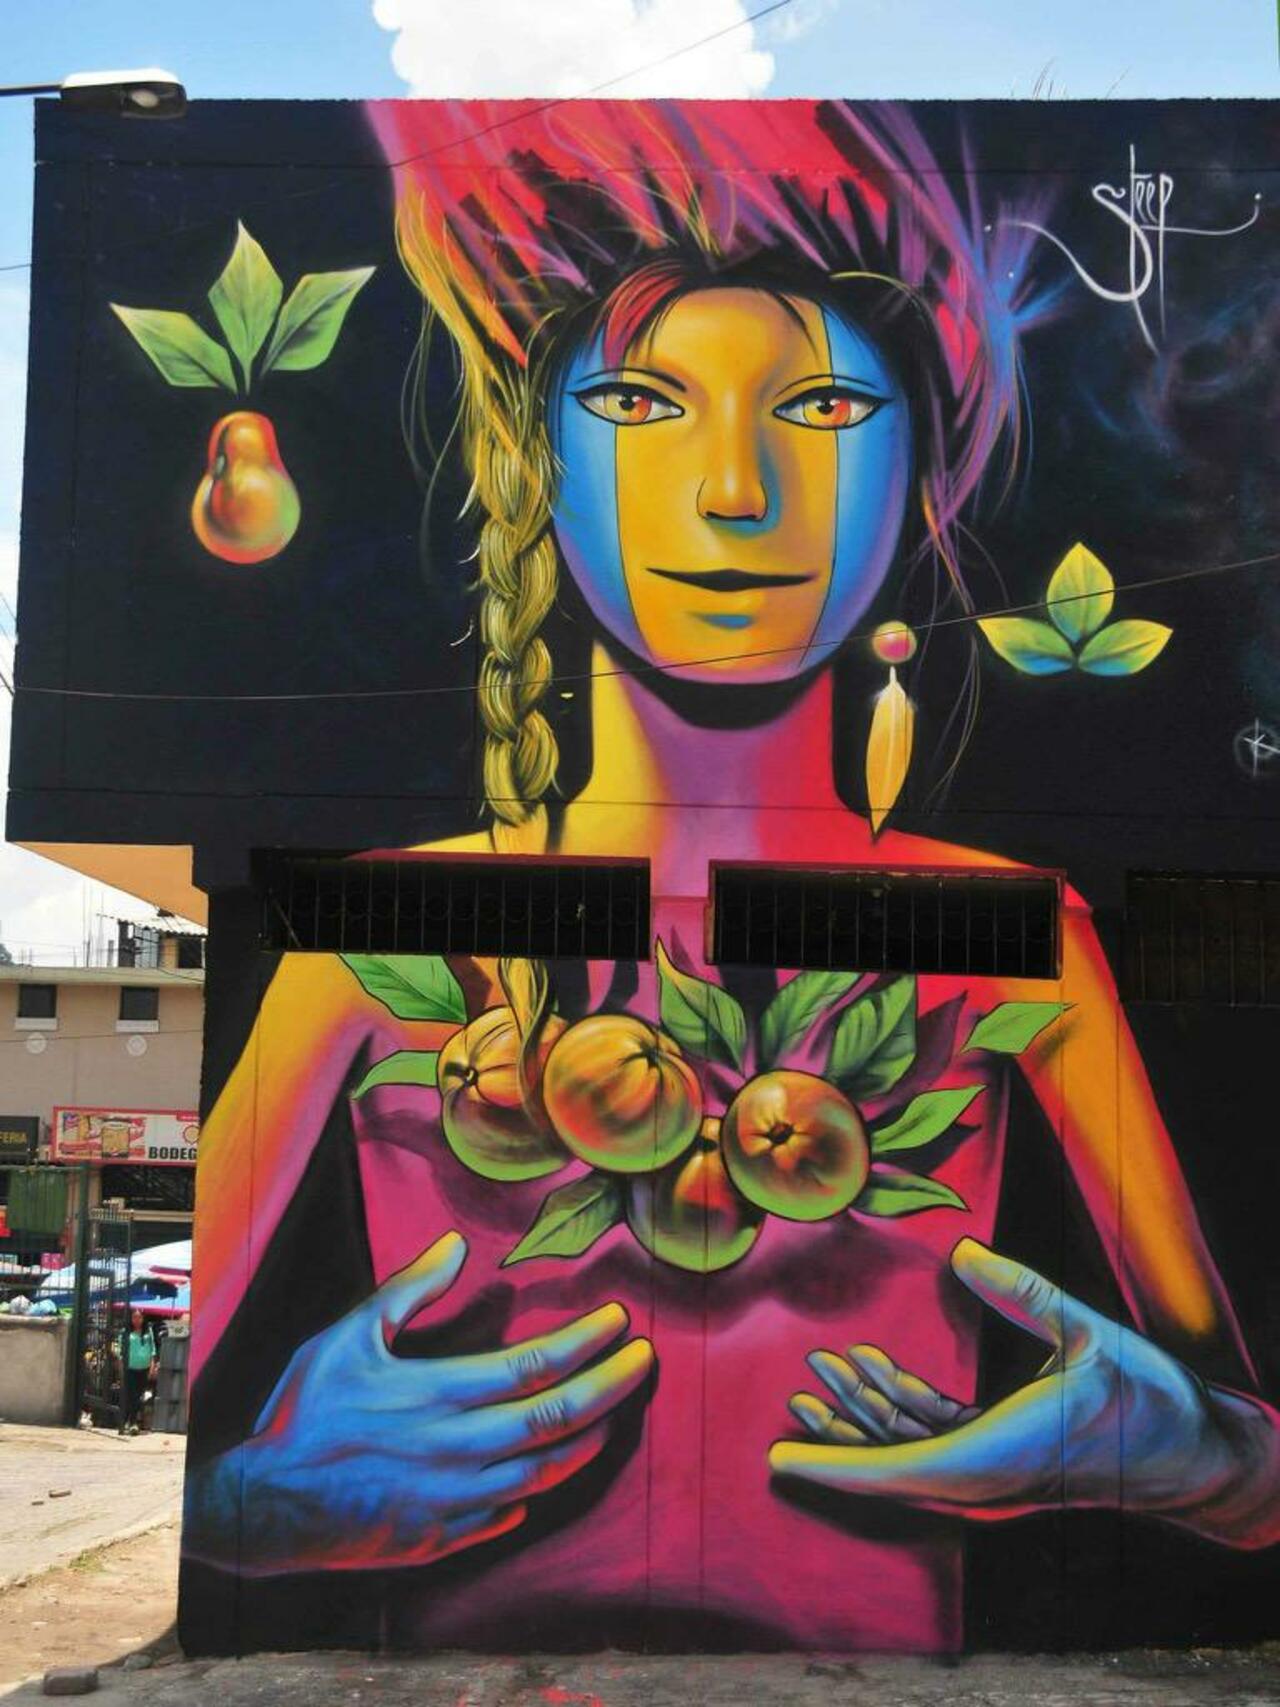 Street Art by Steep

#art #graffiti #mural #streetart http://t.co/VdIUQ2WWUX